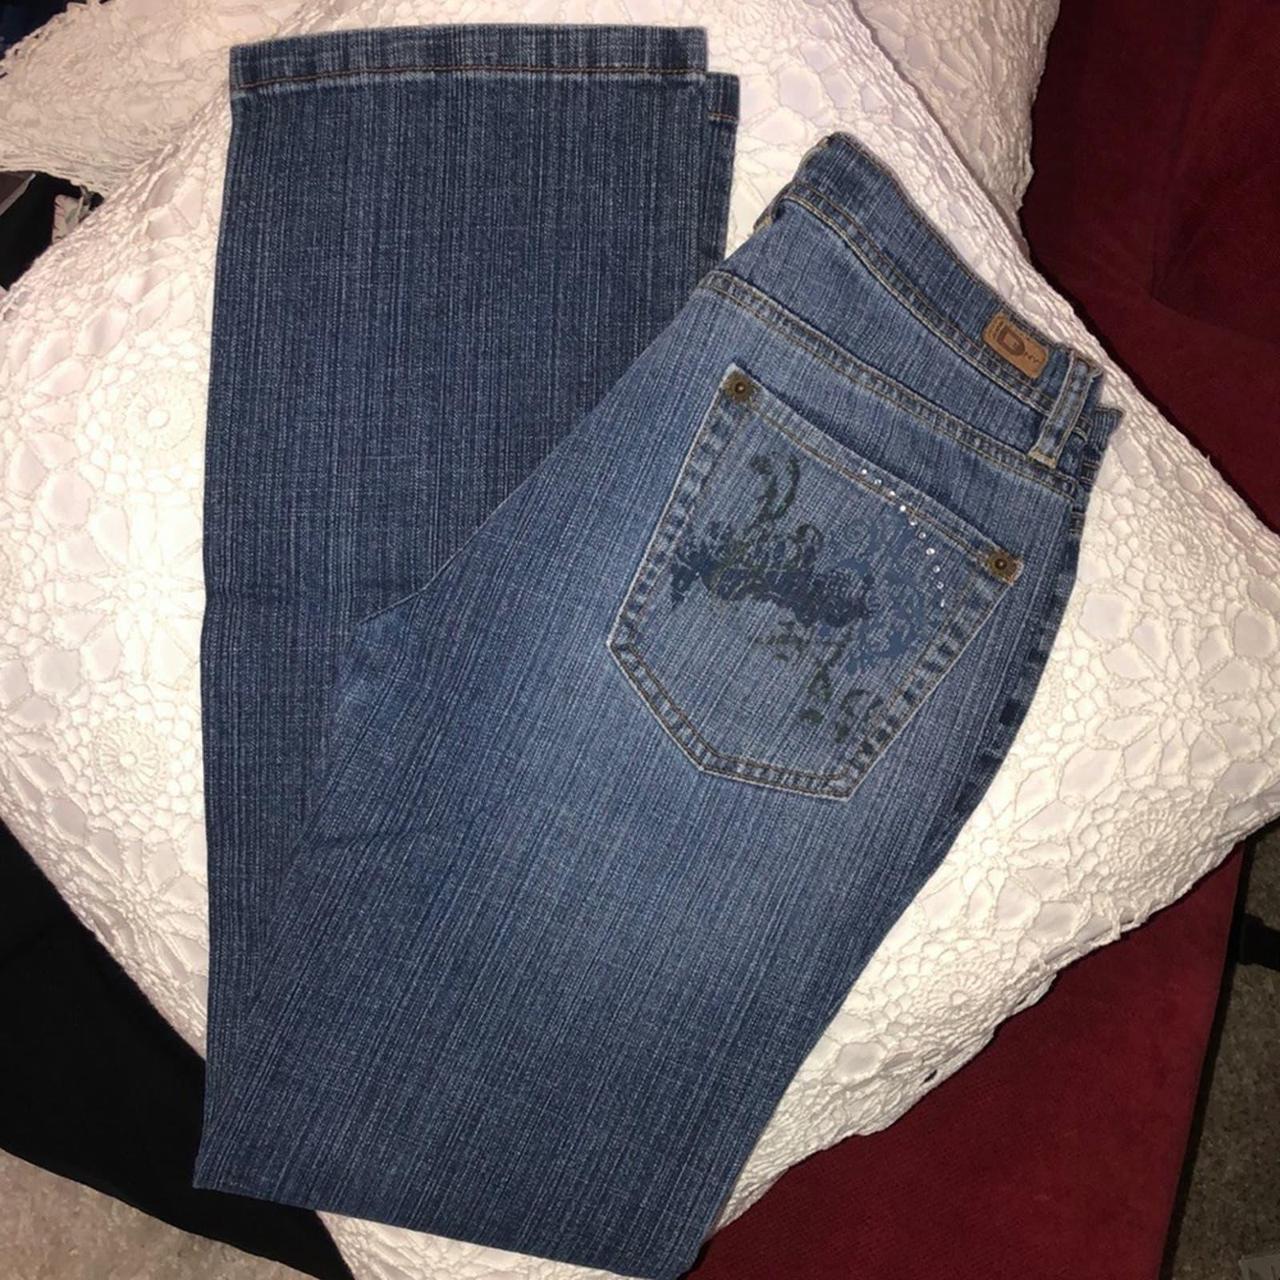 DKNY Vintage Jeans Jewel-studded back pocket jeans,... - Depop